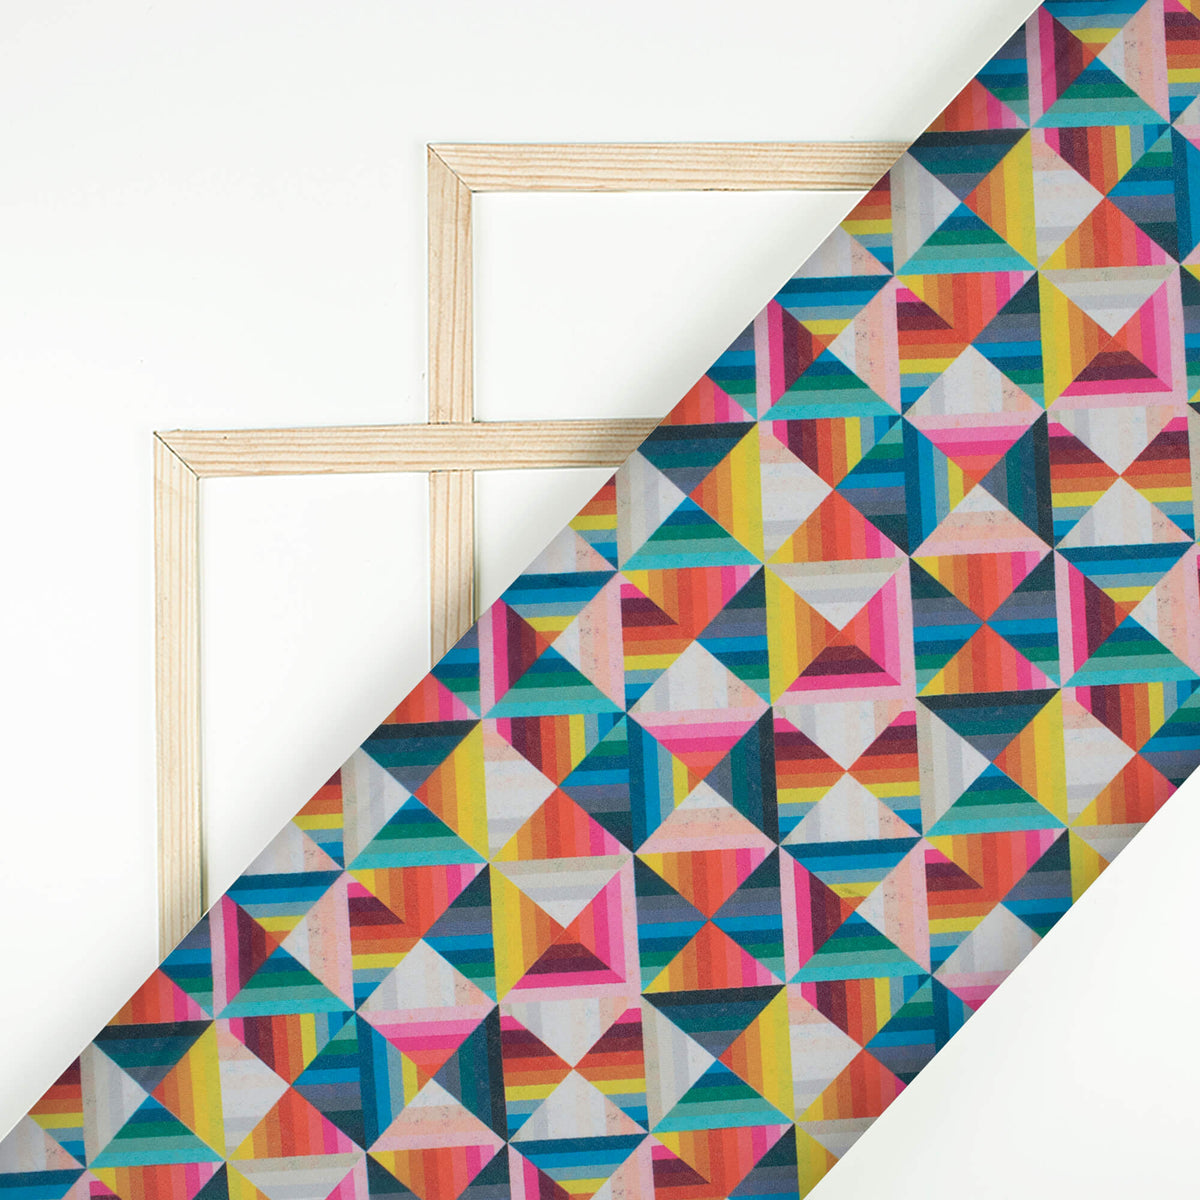 Multi-Color Geometric Pattern Digital Print Georgette Fabric